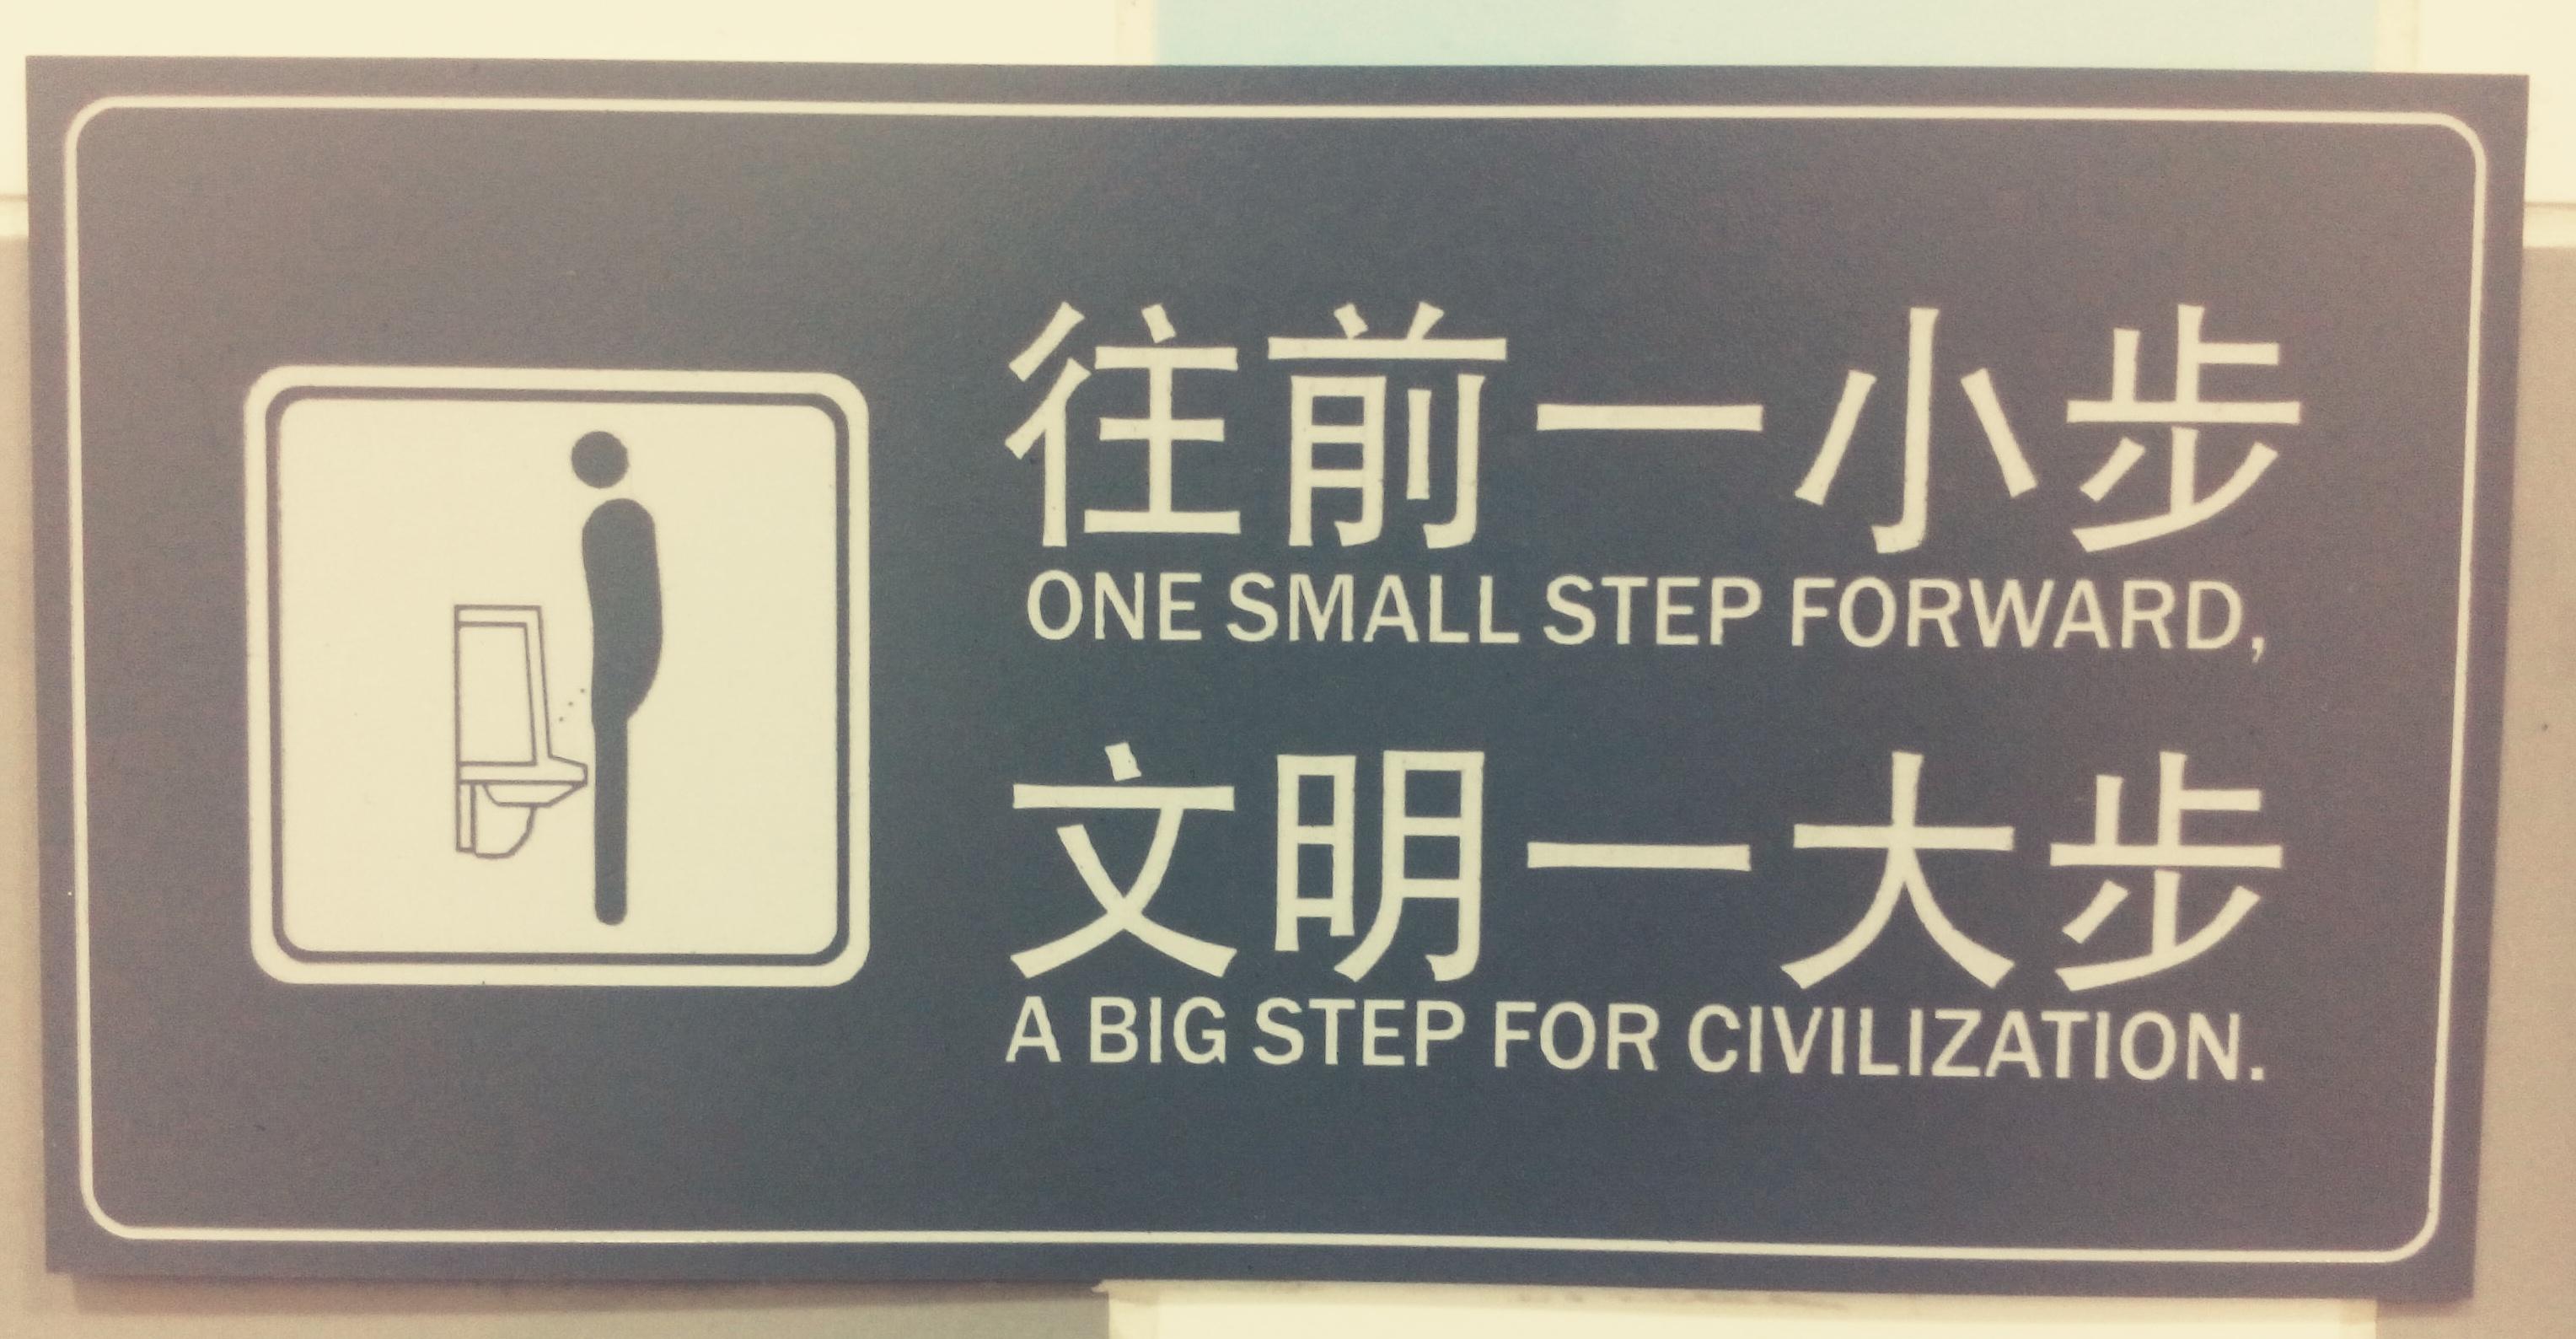 One small step forward, a big step for civilization